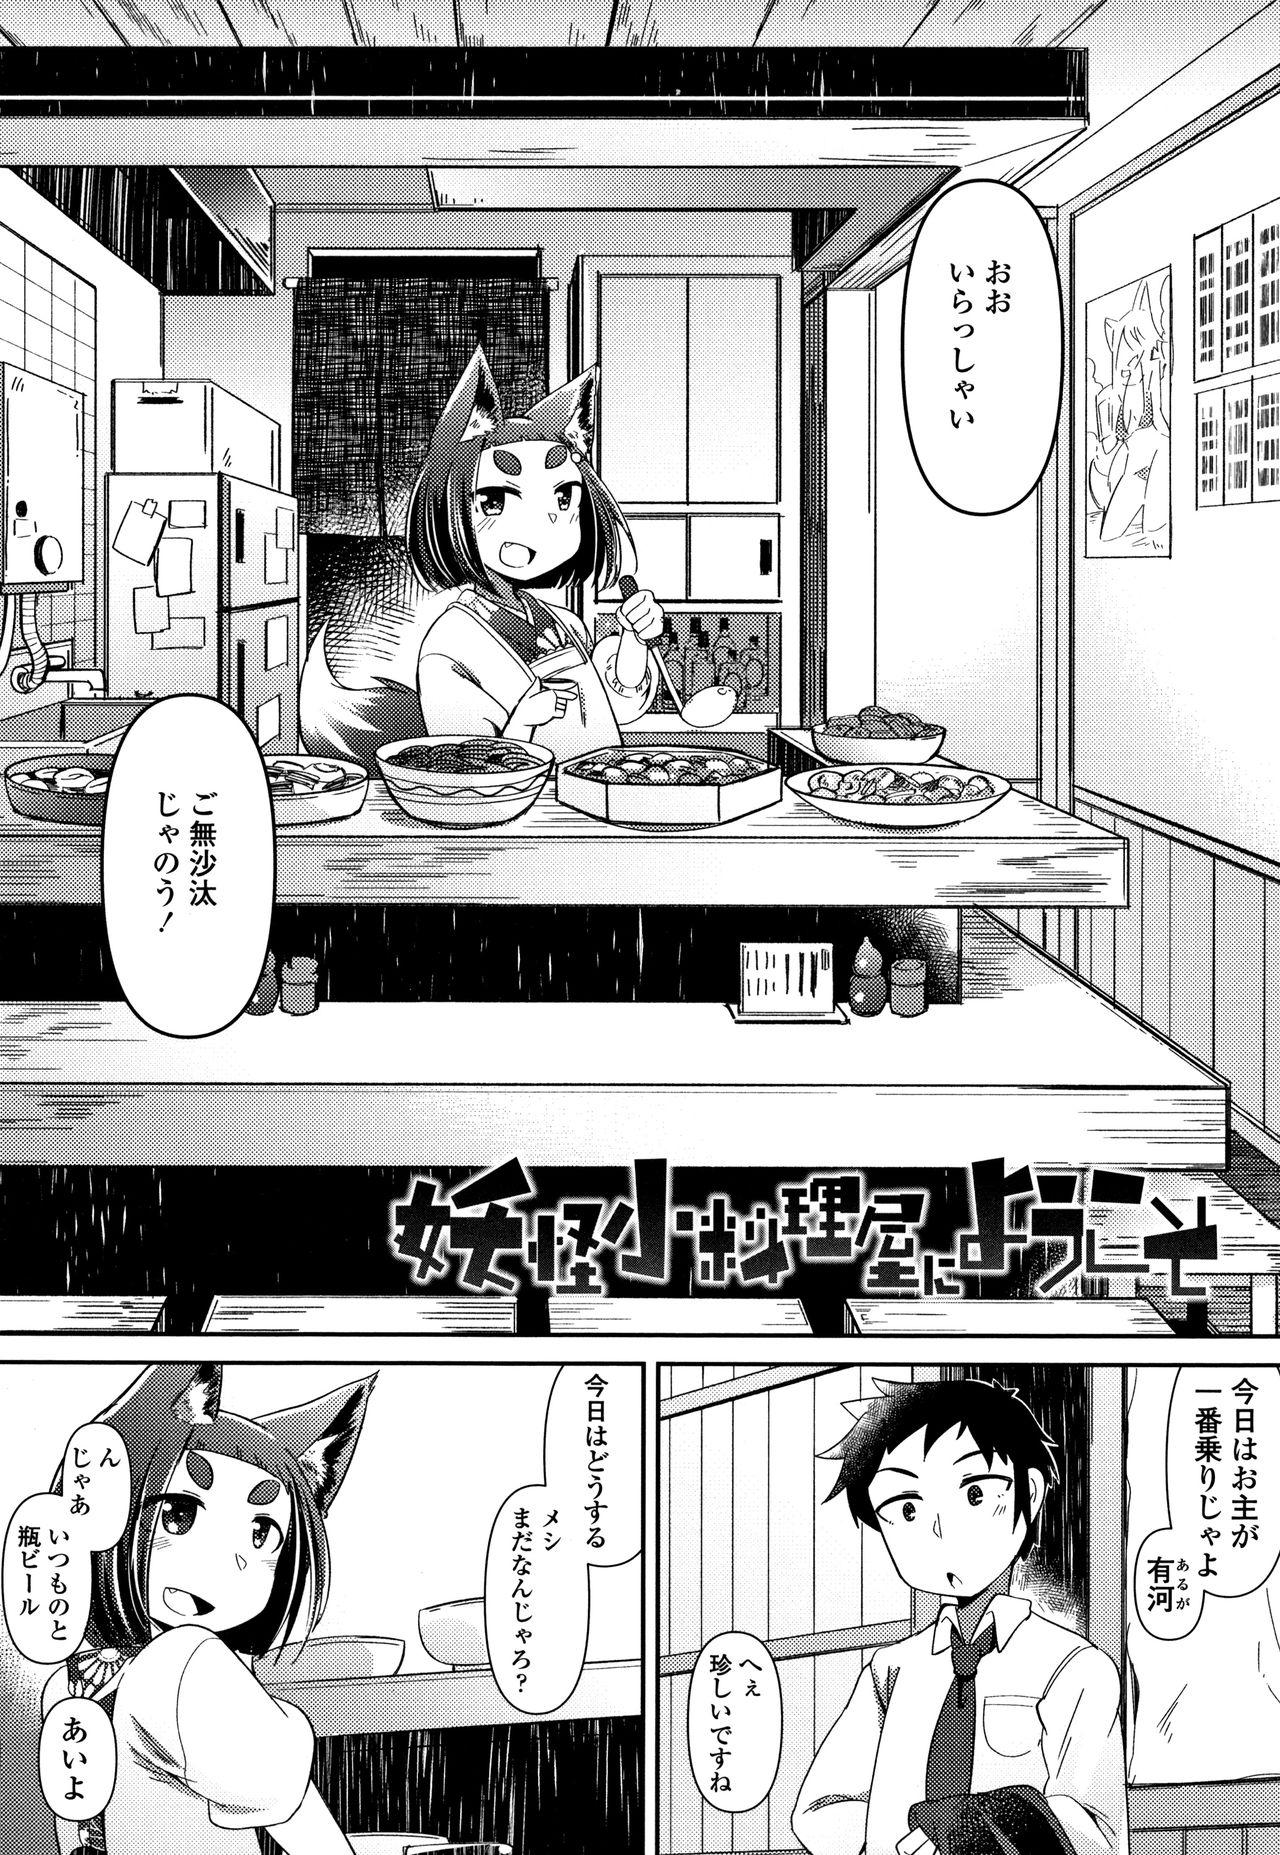 Novinho Youkai Koryouriya ni Youkoso - Welcome to apparition small restaurant Boy Girl - Page 9